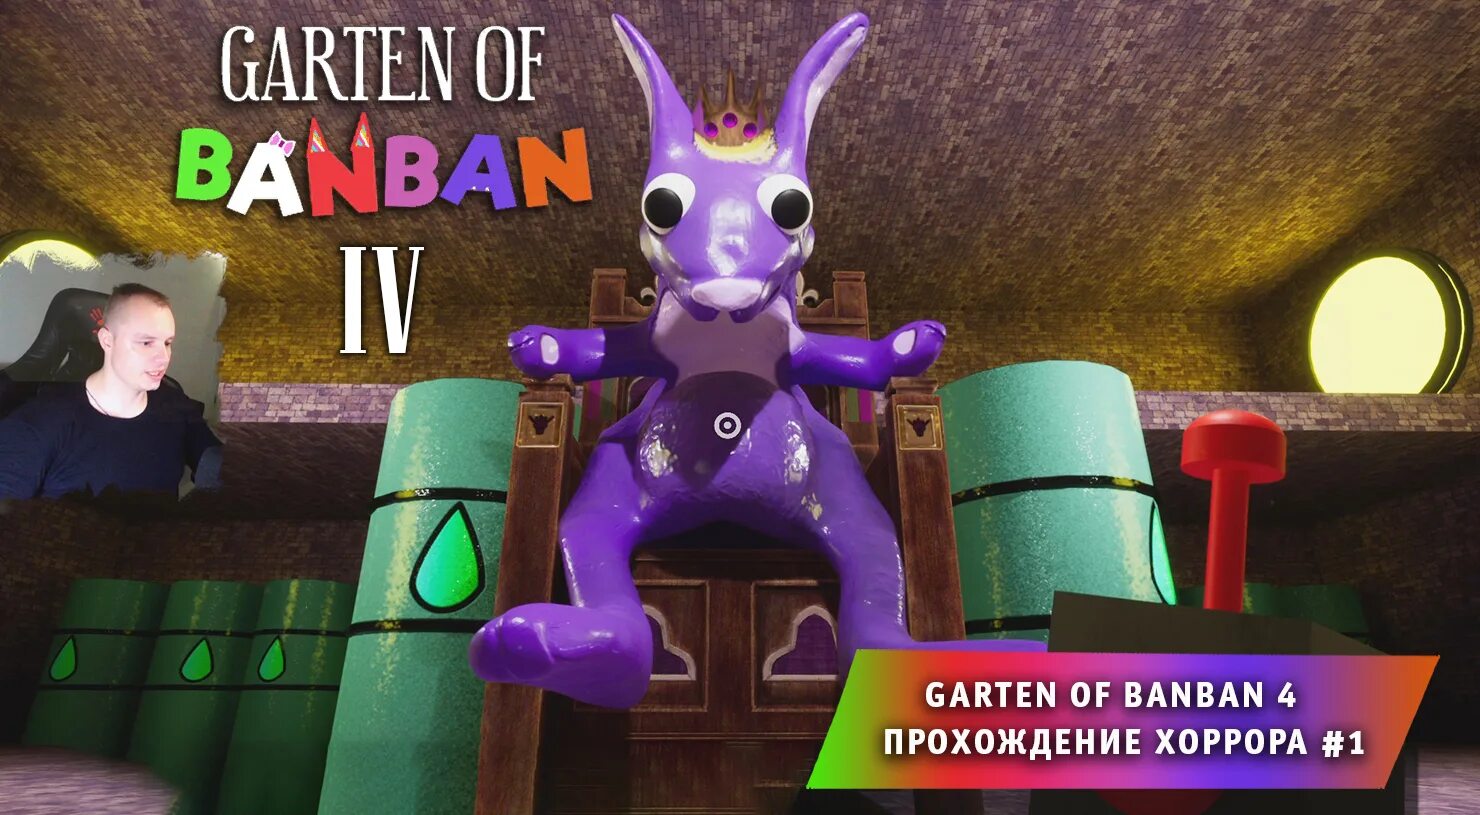 Бан 4.9. Банбан 4. Garden of ban ban 4. Гарден оф Банбан Банбан. Garden of Banban игра.